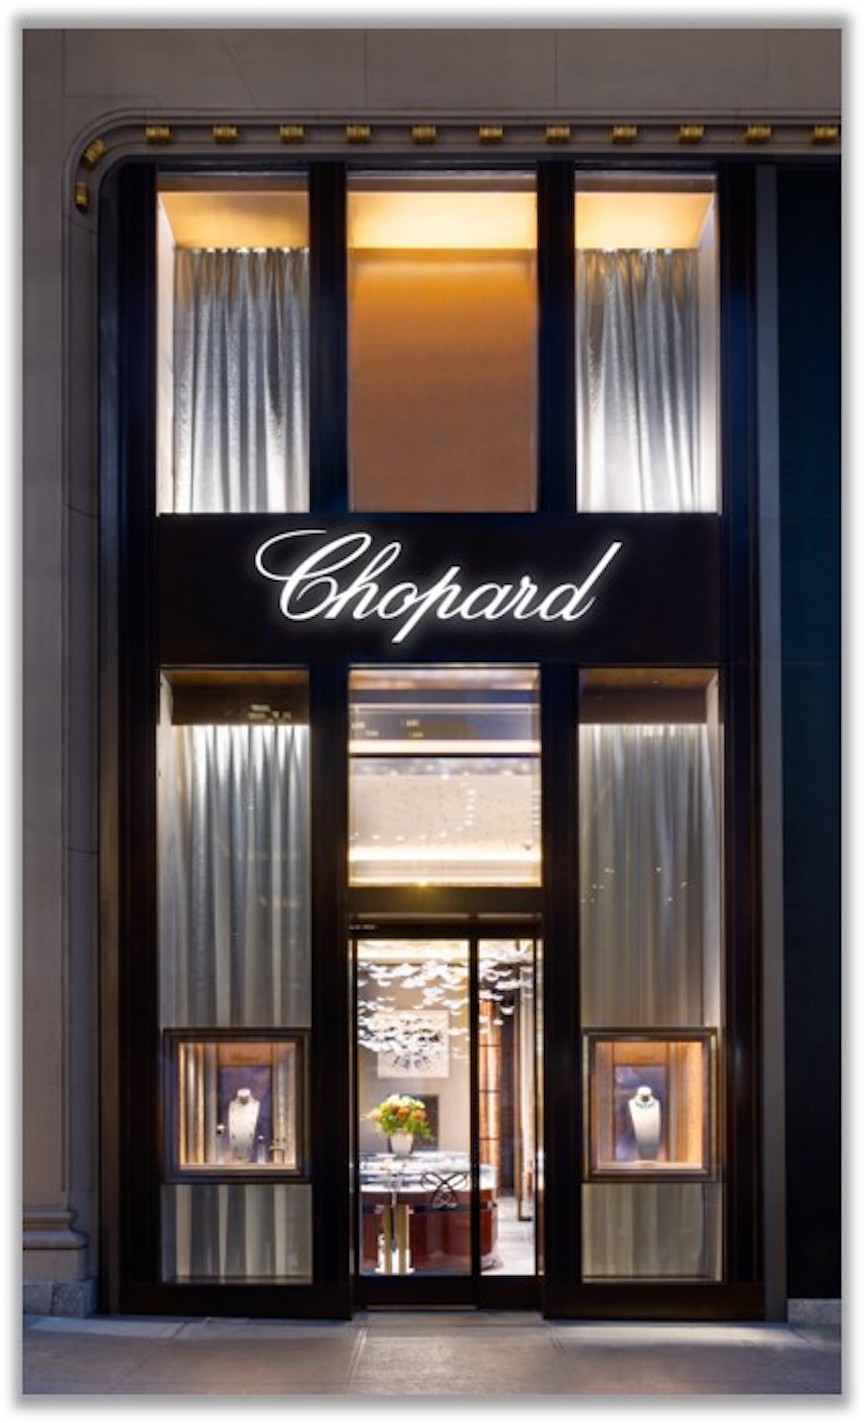 Chopard Fifth Avenue flagship store. 